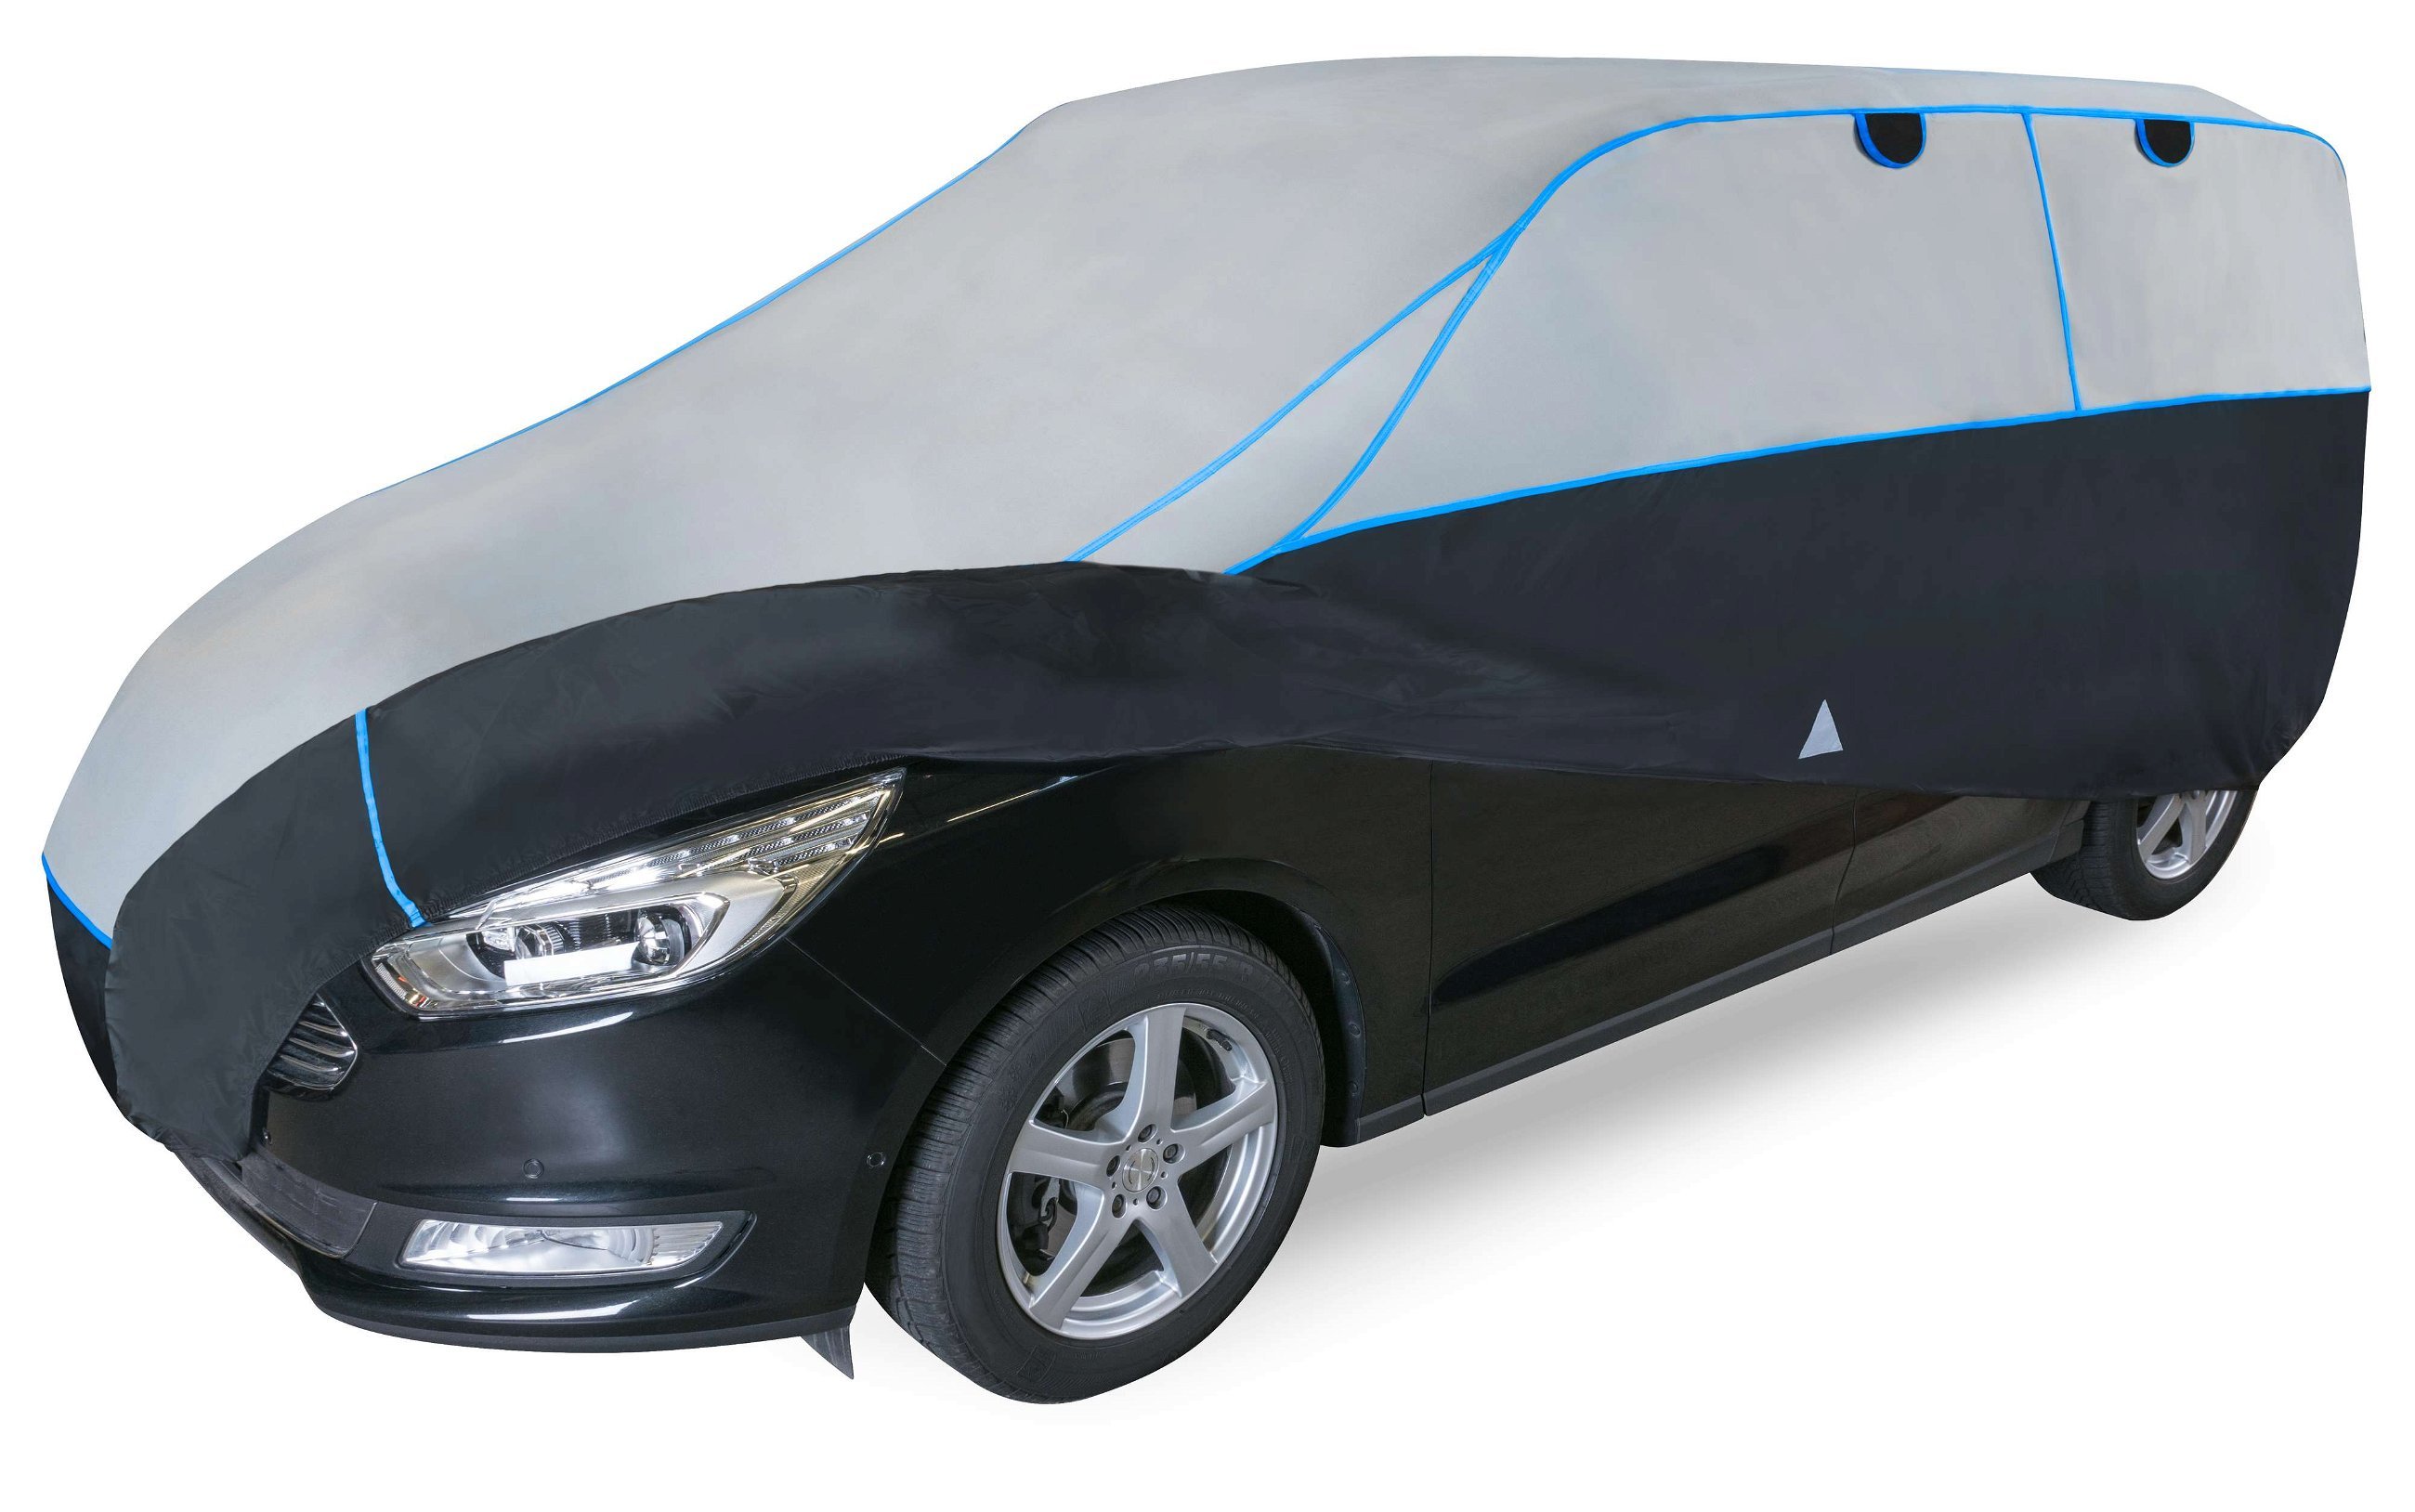 Telo Copriauto antigrandine Comfort Protect SUV XL 520x185x155